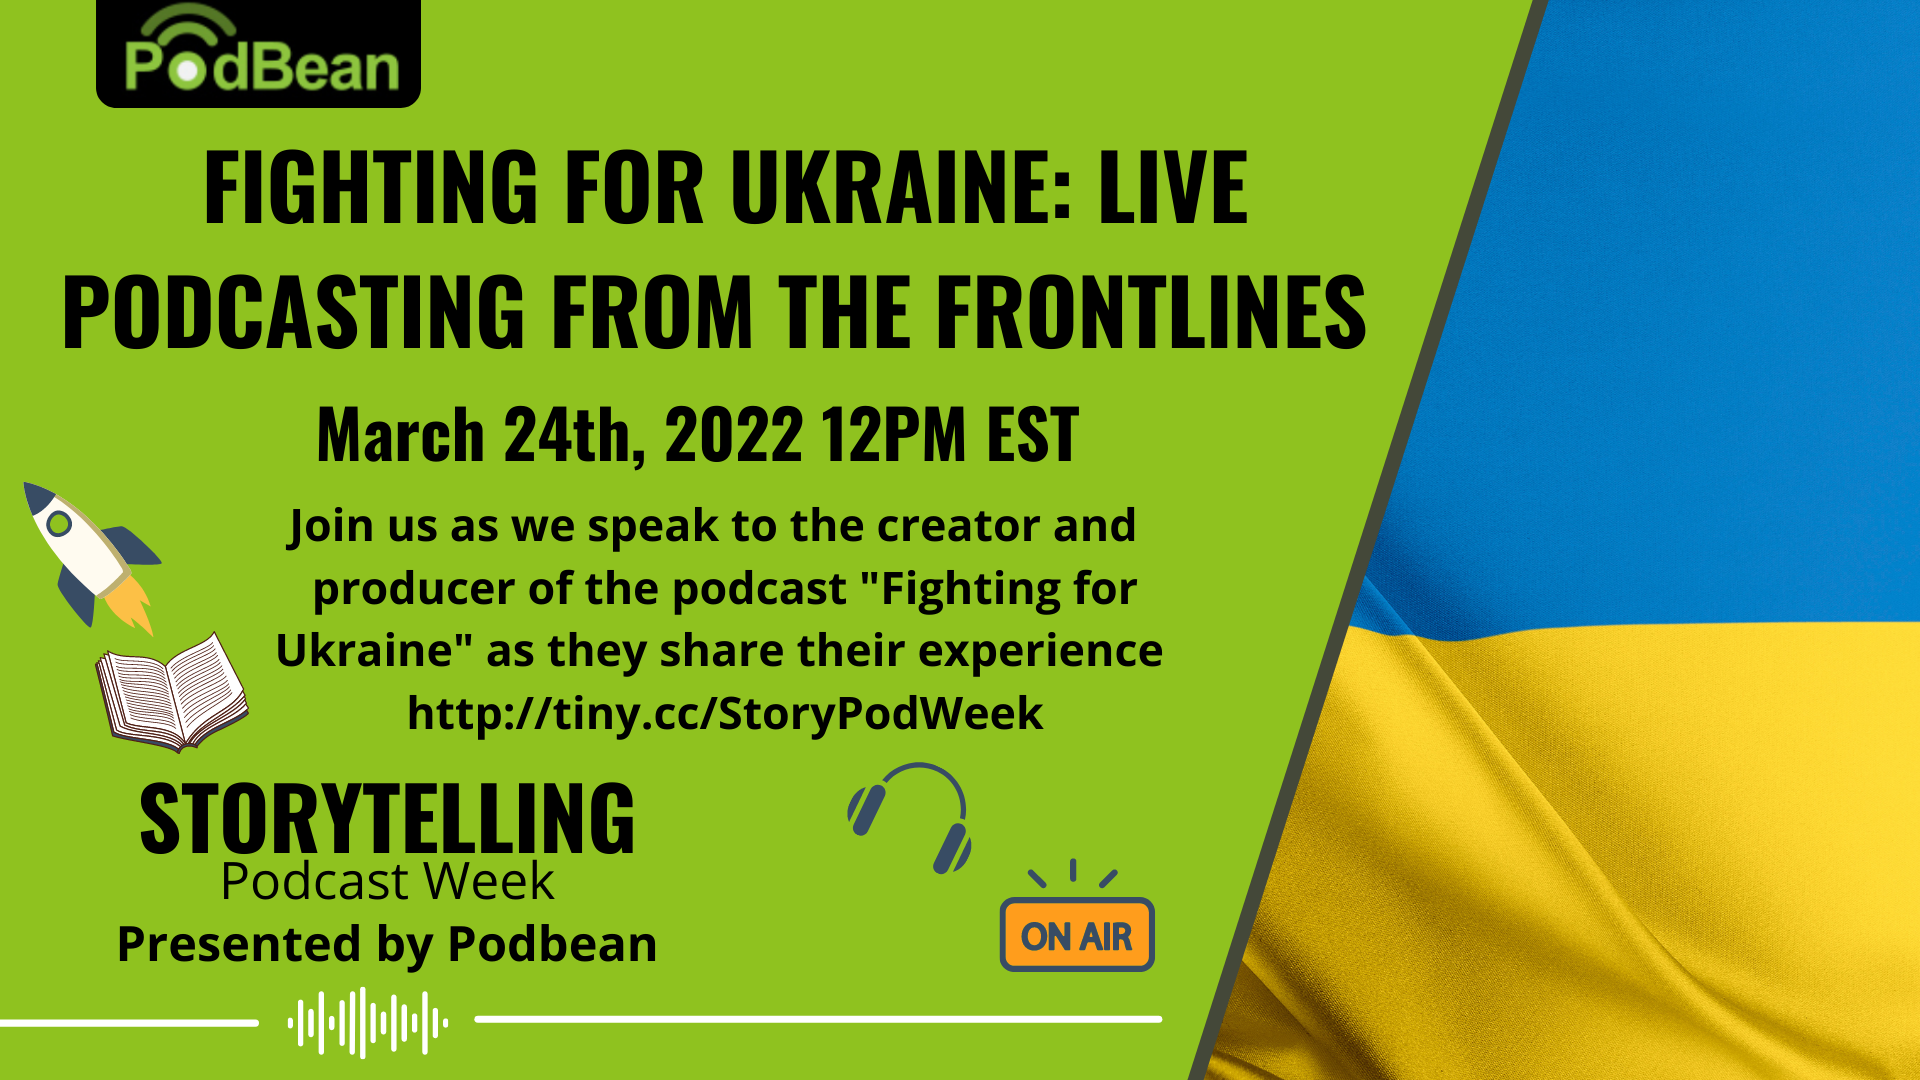 Fighting for Ukraine podcast event